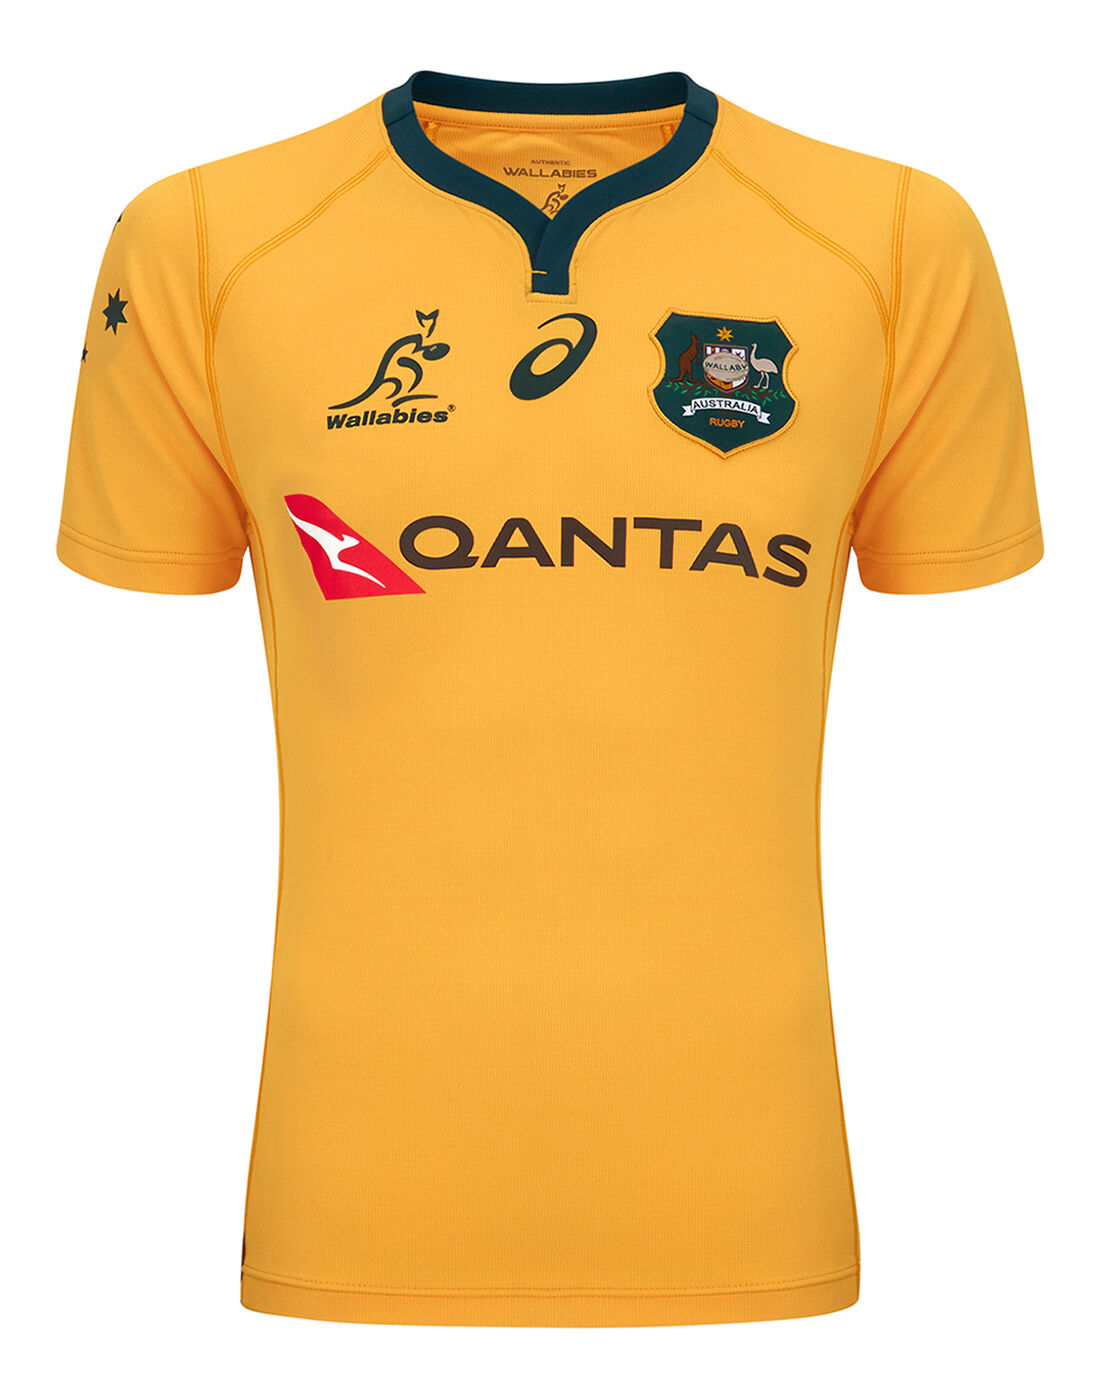 australia rugby shirt